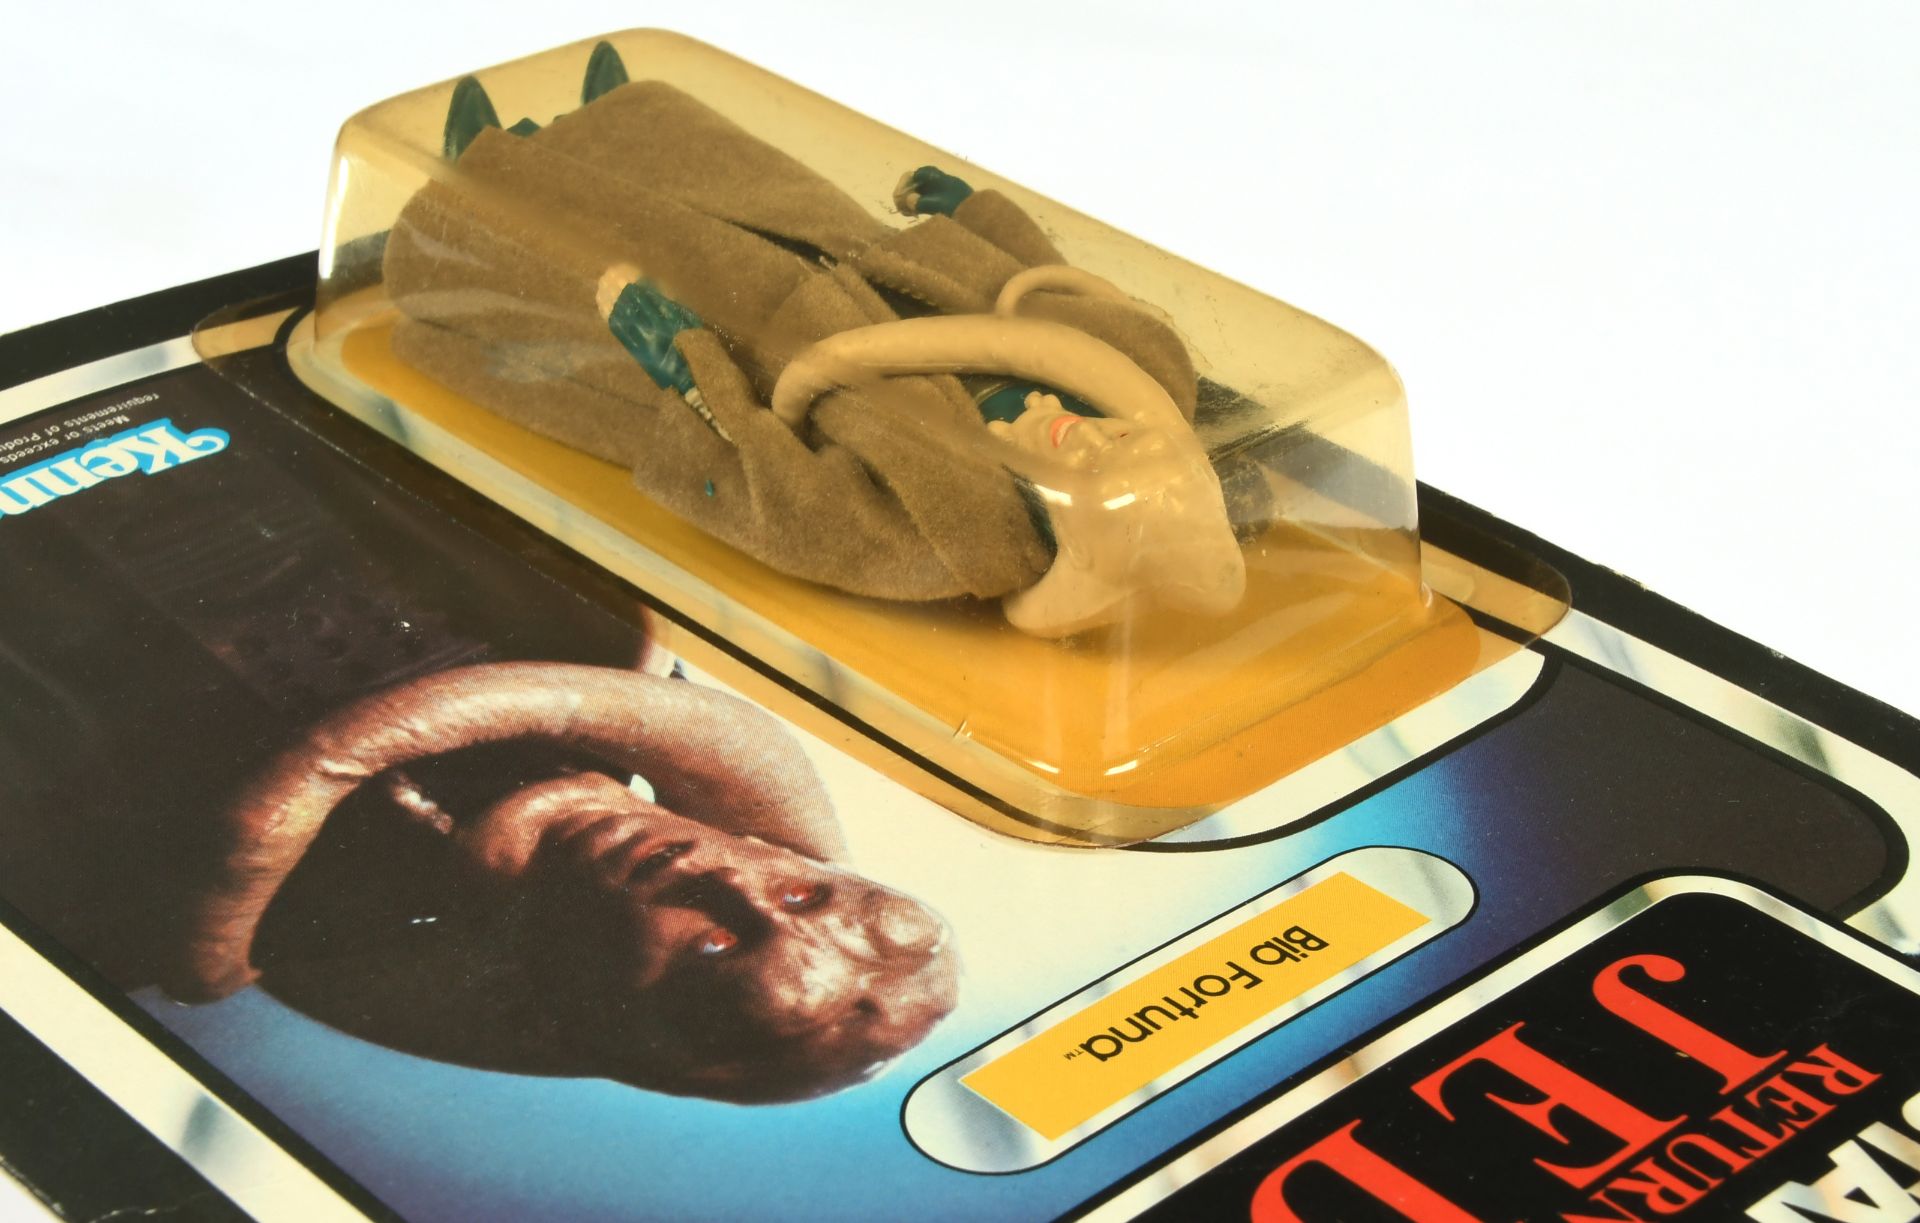 Kenner Star Wars vintage Return of the Jedi Bib Fortuna 3 3/4" figure - Image 4 of 4